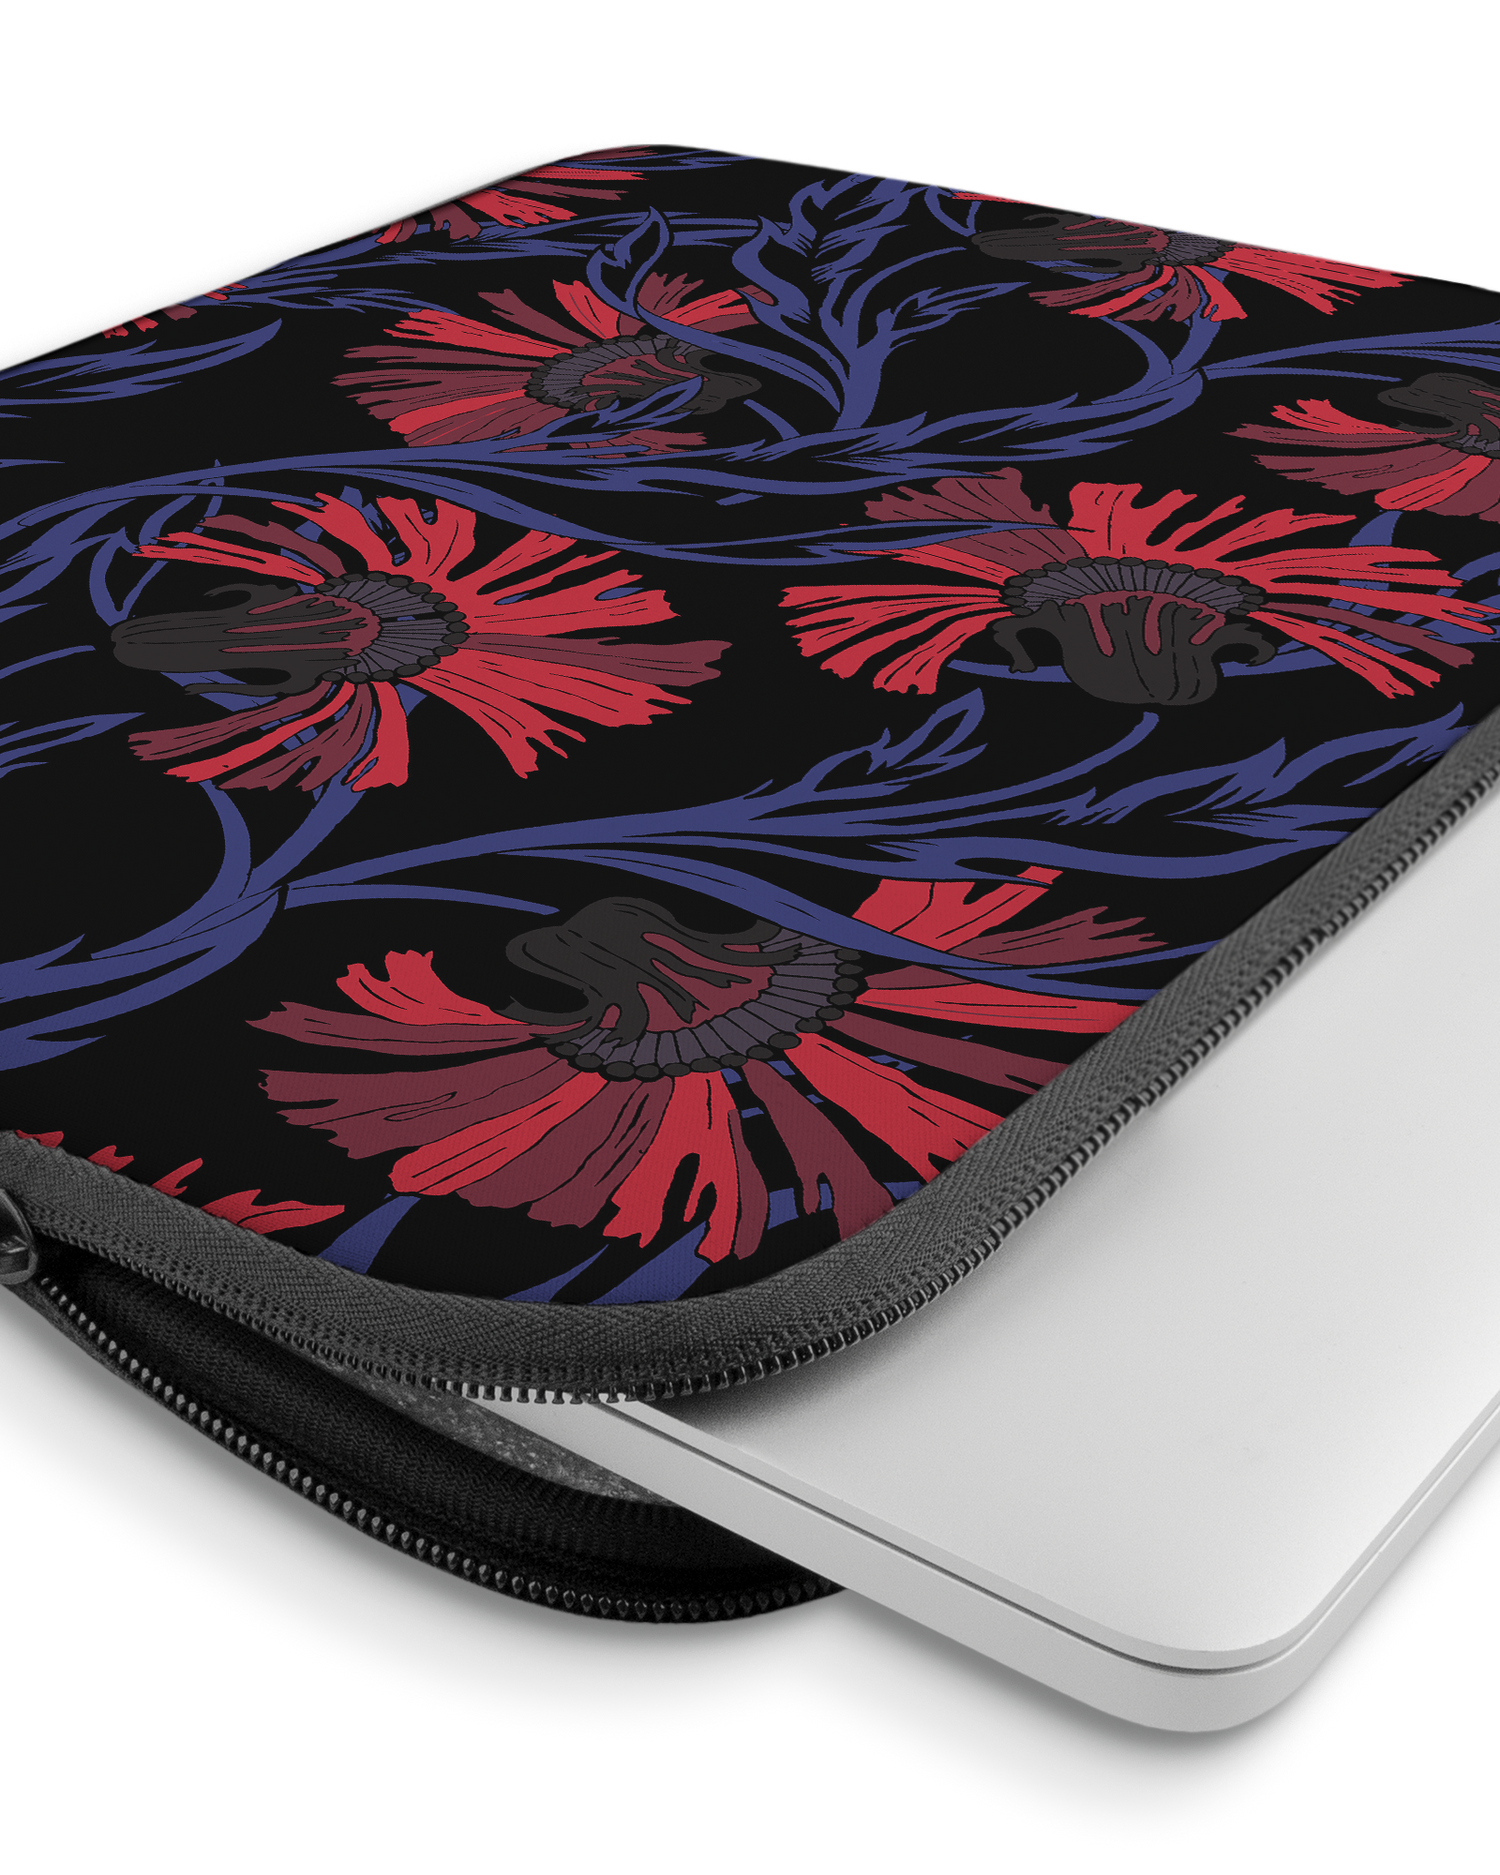 Midnight Floral Laptophülle 15 Zoll mit Gerät im Inneren